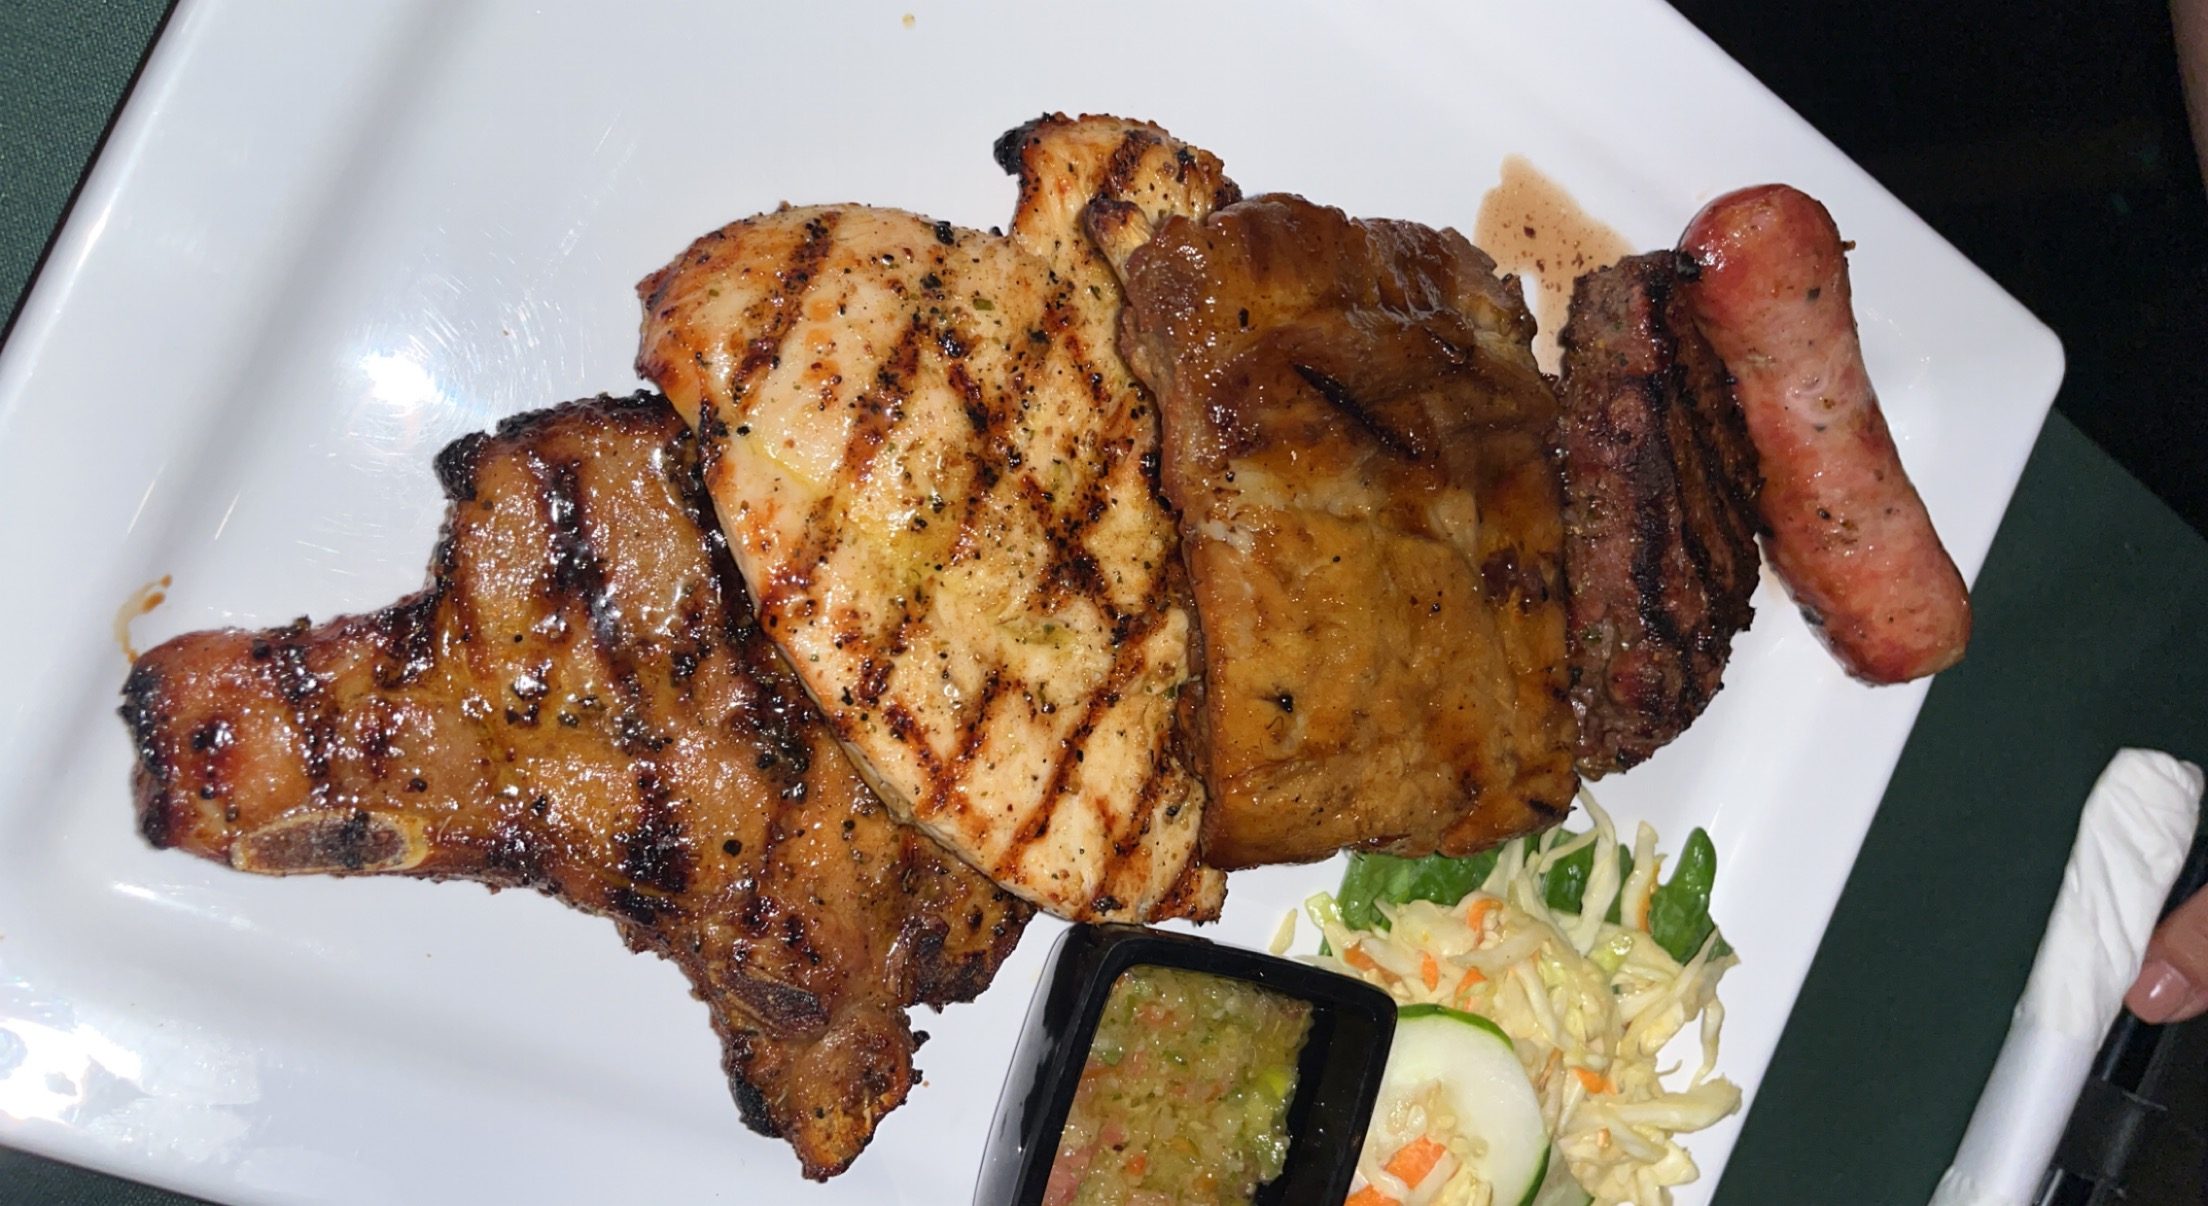 Steak & Ribs Curaçao mixed grill